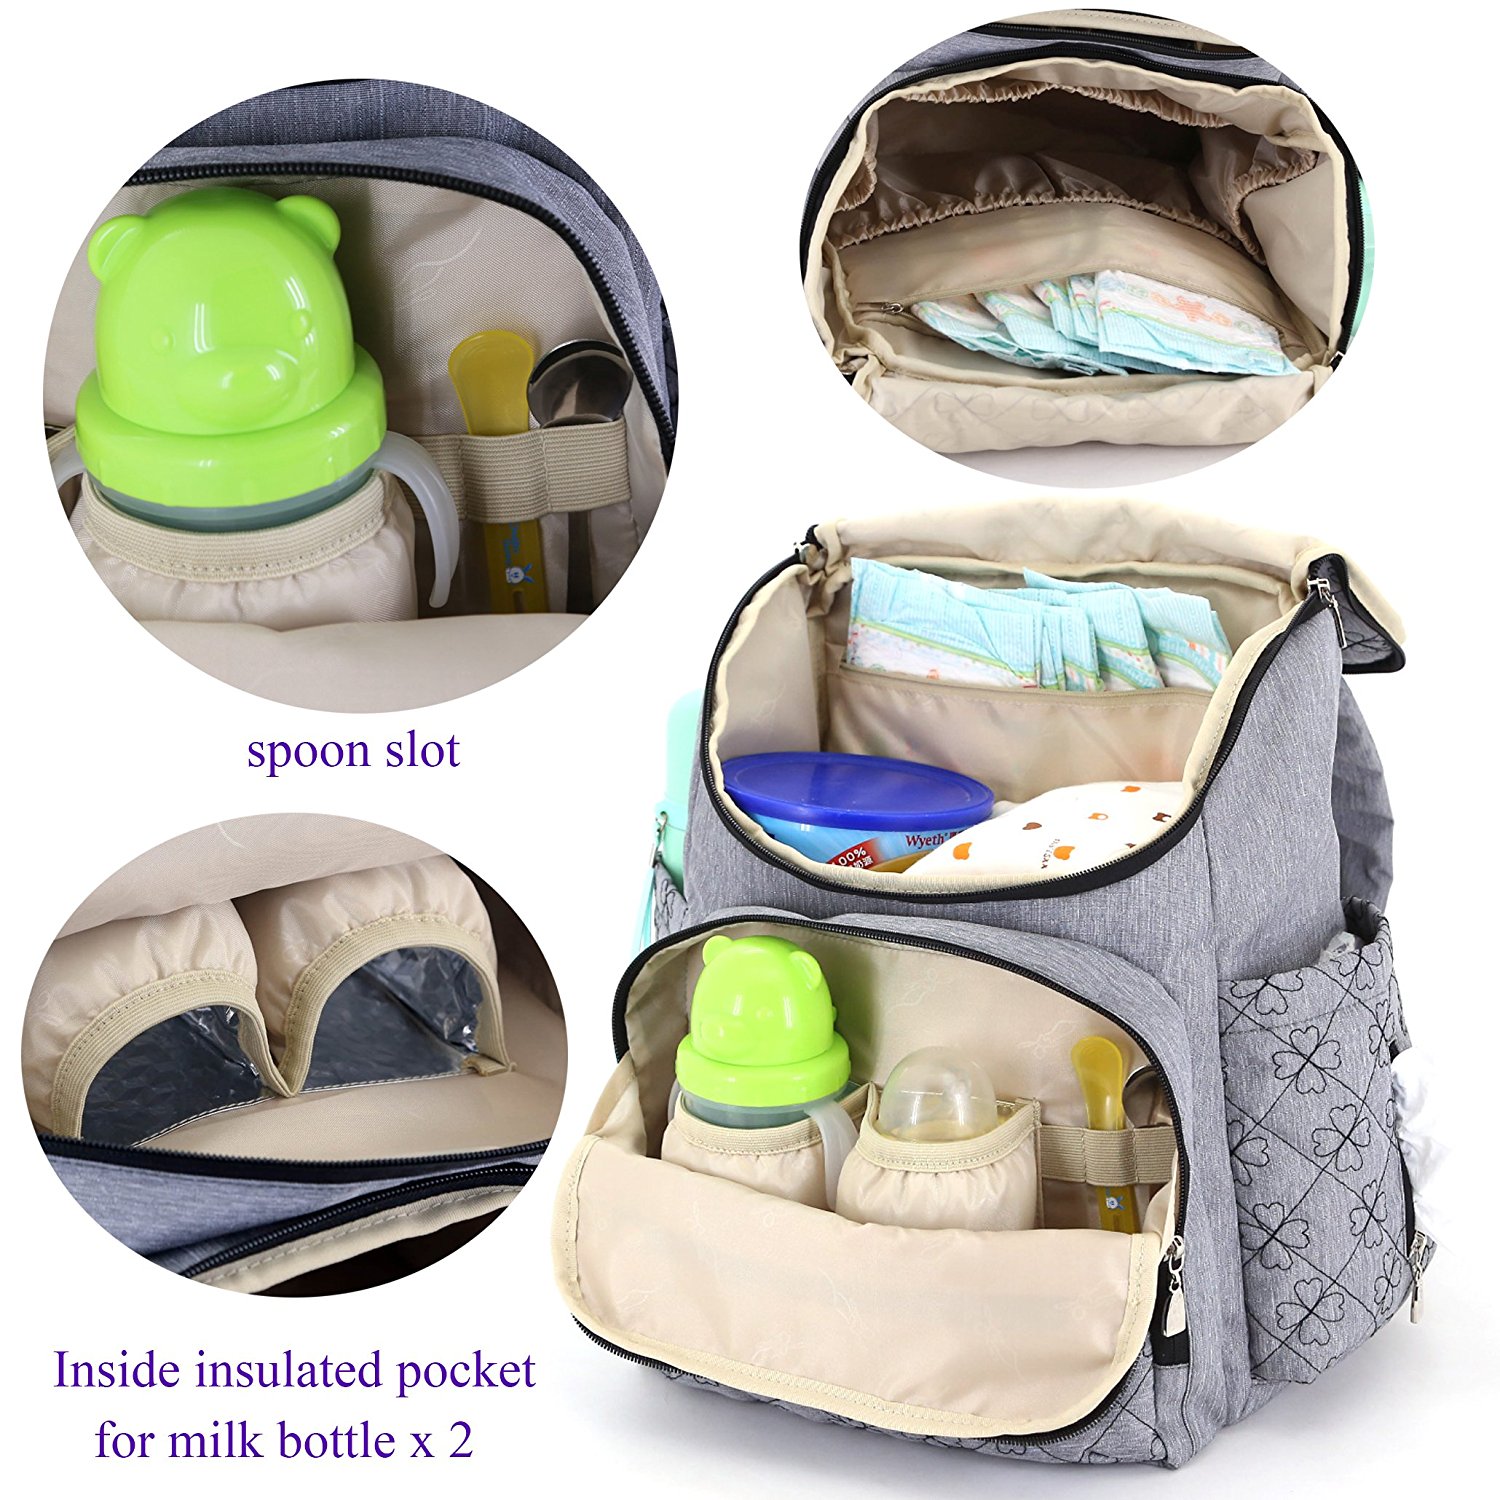 Diaper Bag Backpack With Baby Stroller Straps , Stylish Travel Designer And Organizer For Women & Men, 12 Pockets, Grey_ENZO